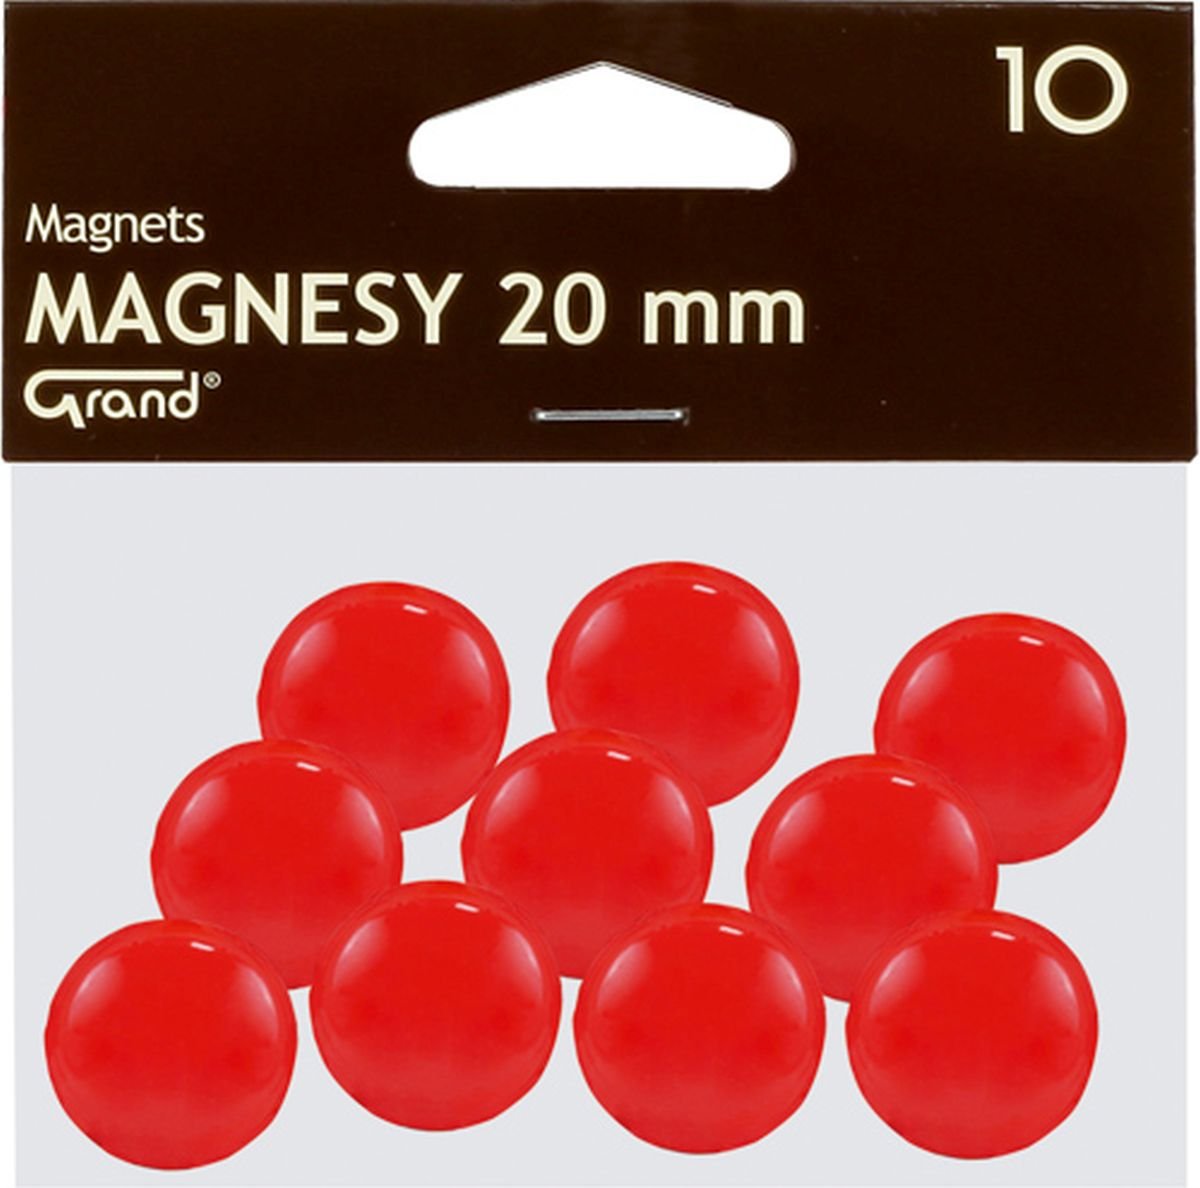 Grand Magnesy 20 mm czerwone 10 sztuk